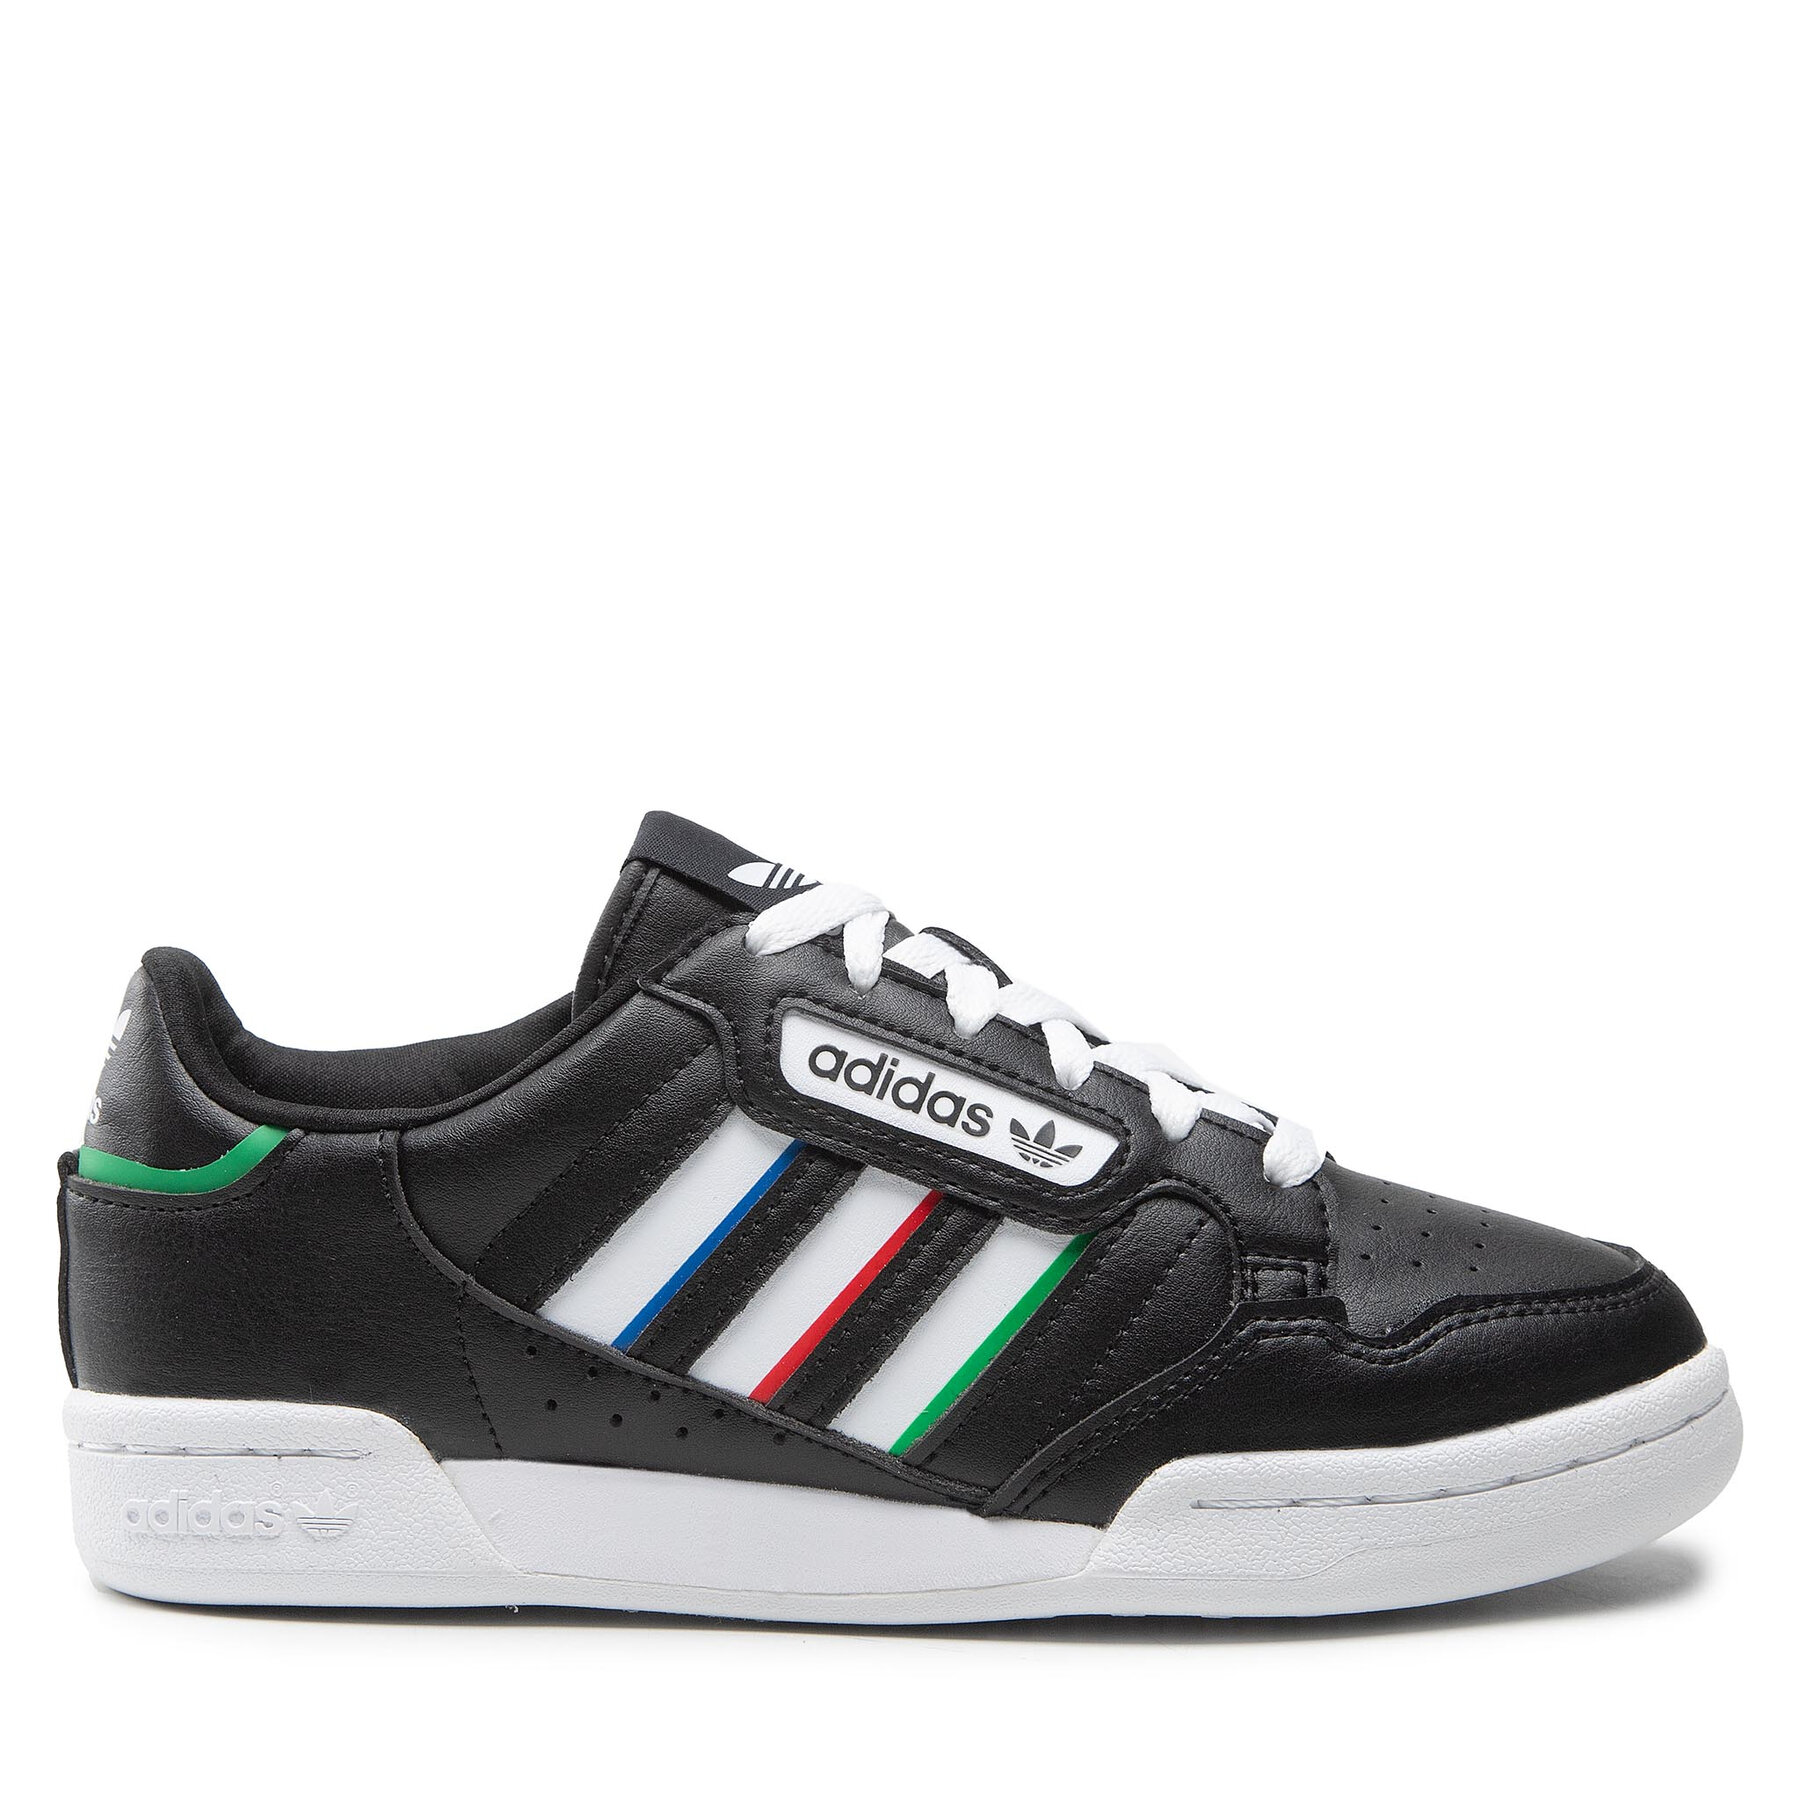 Comprar en oferta Adidas Continental 80 Stripes Kids black/white/vivred